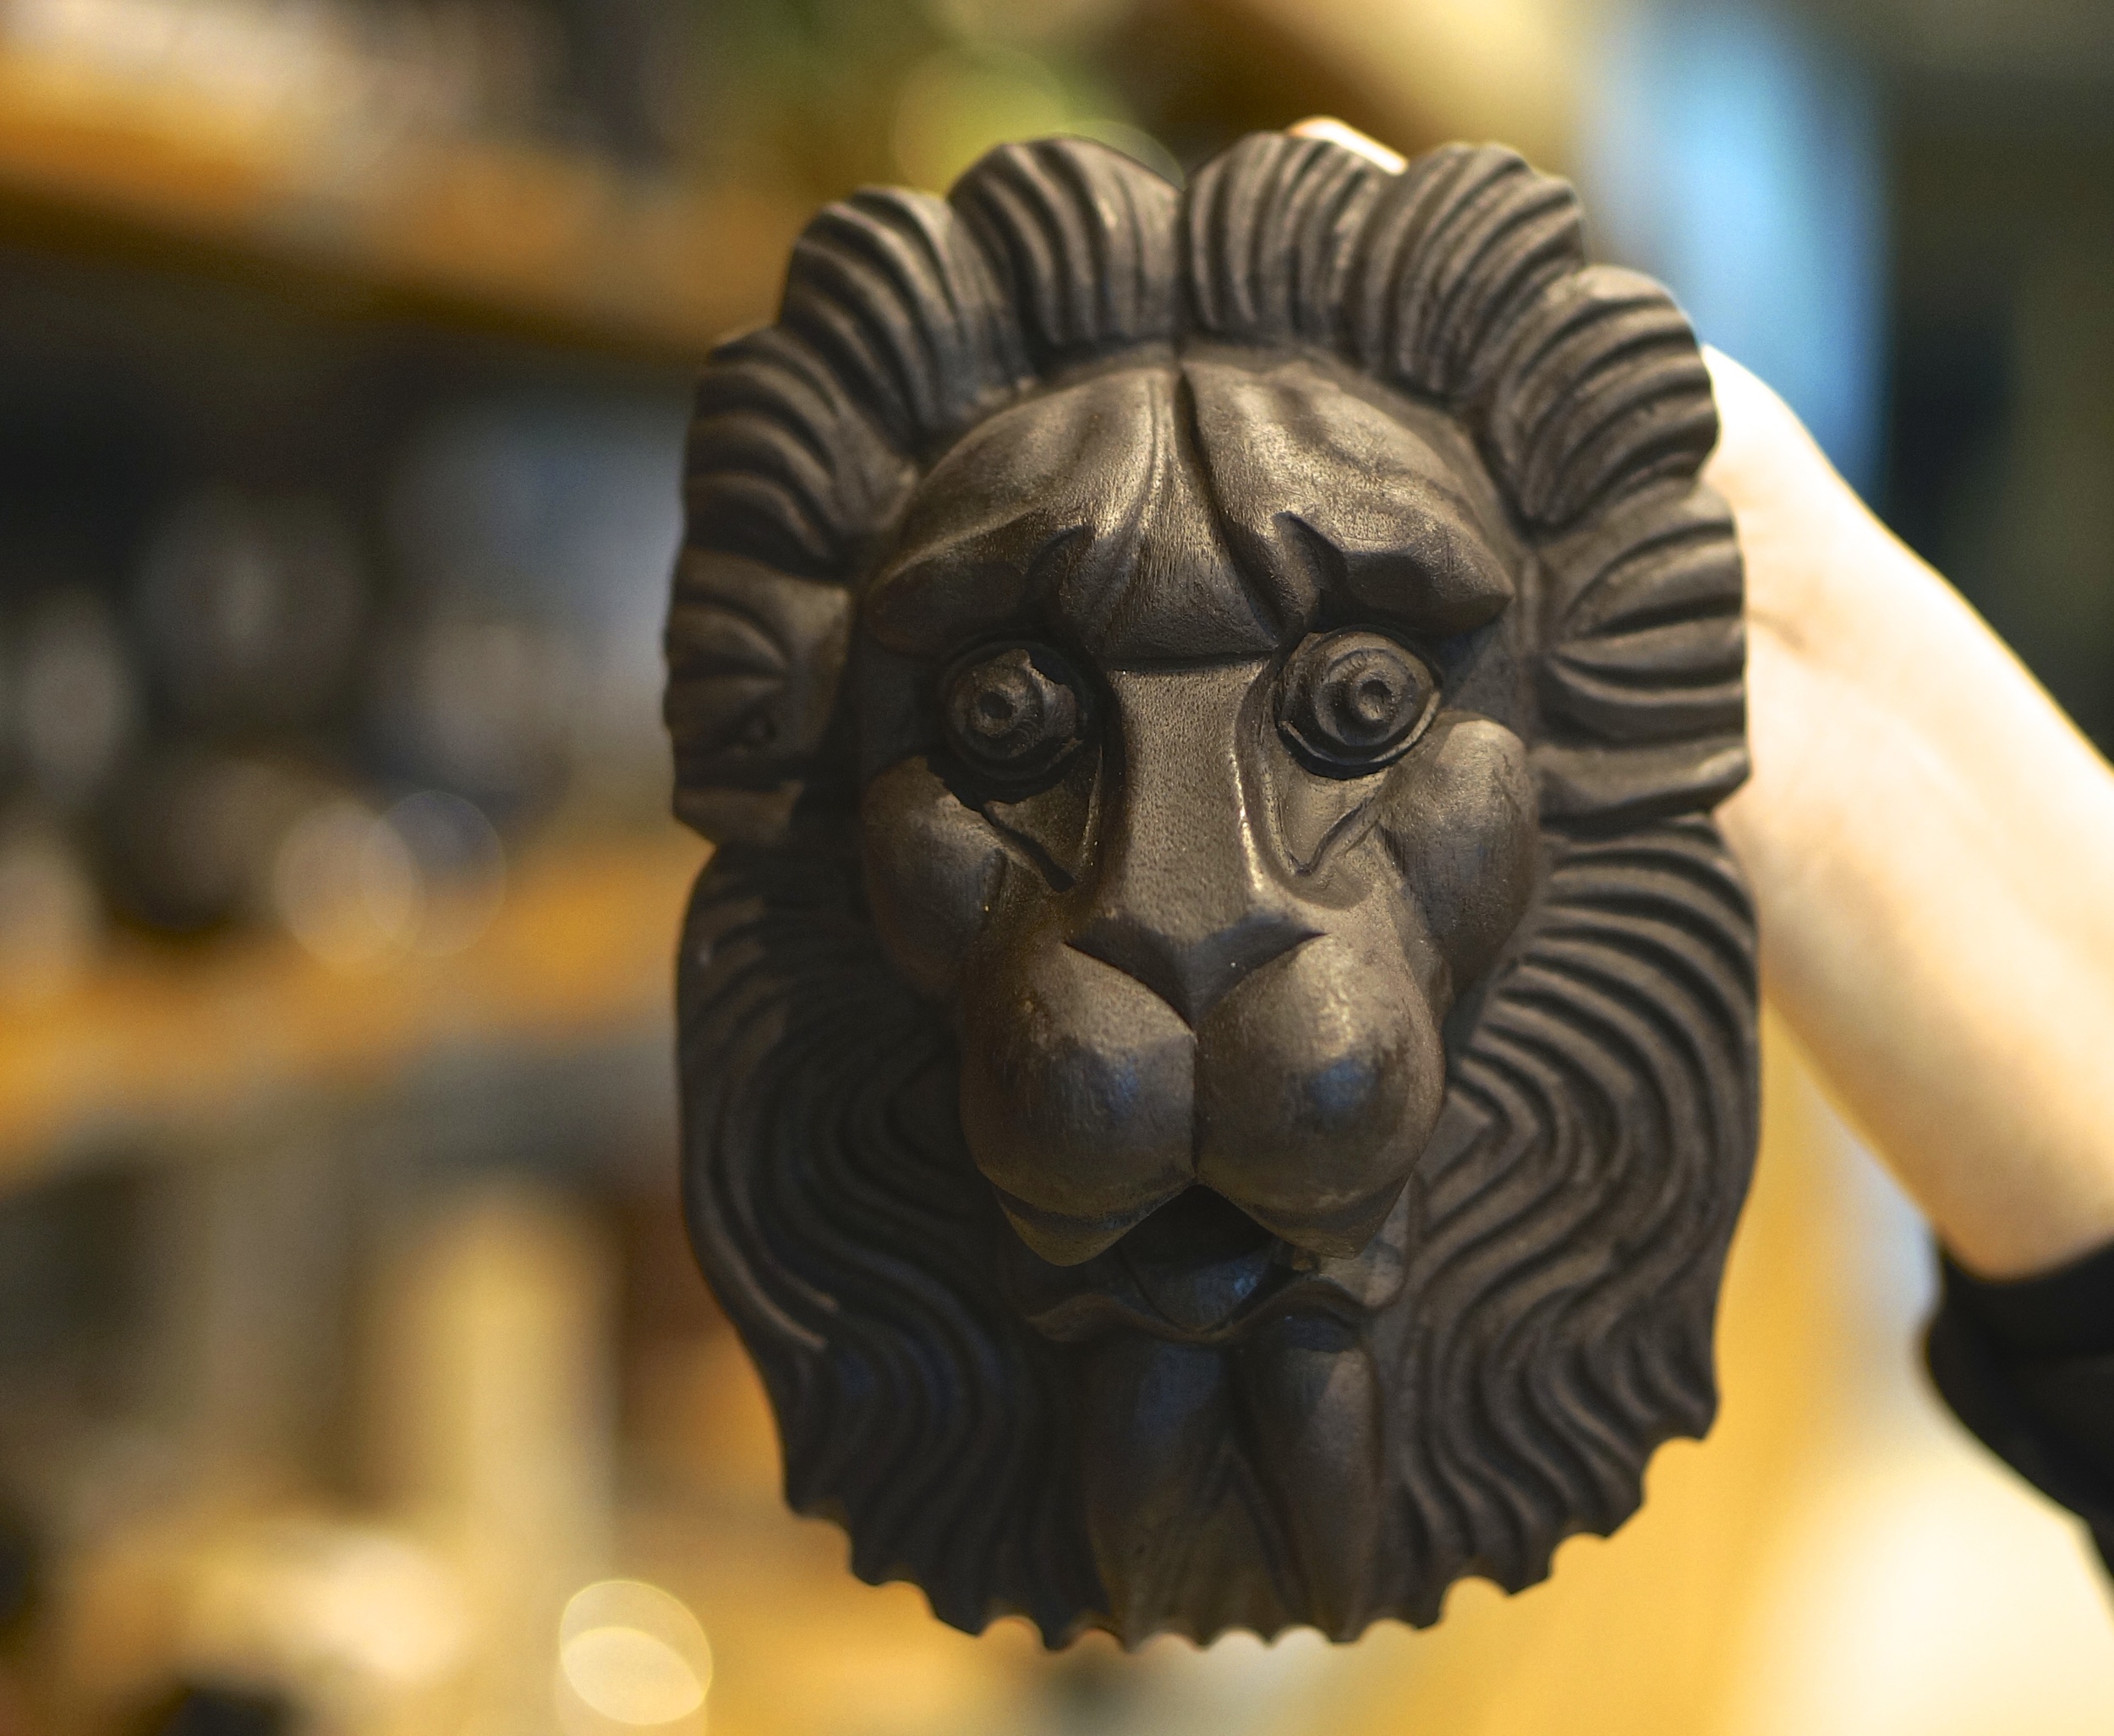 lion mask vasa ship souvenir gift shop stockholm